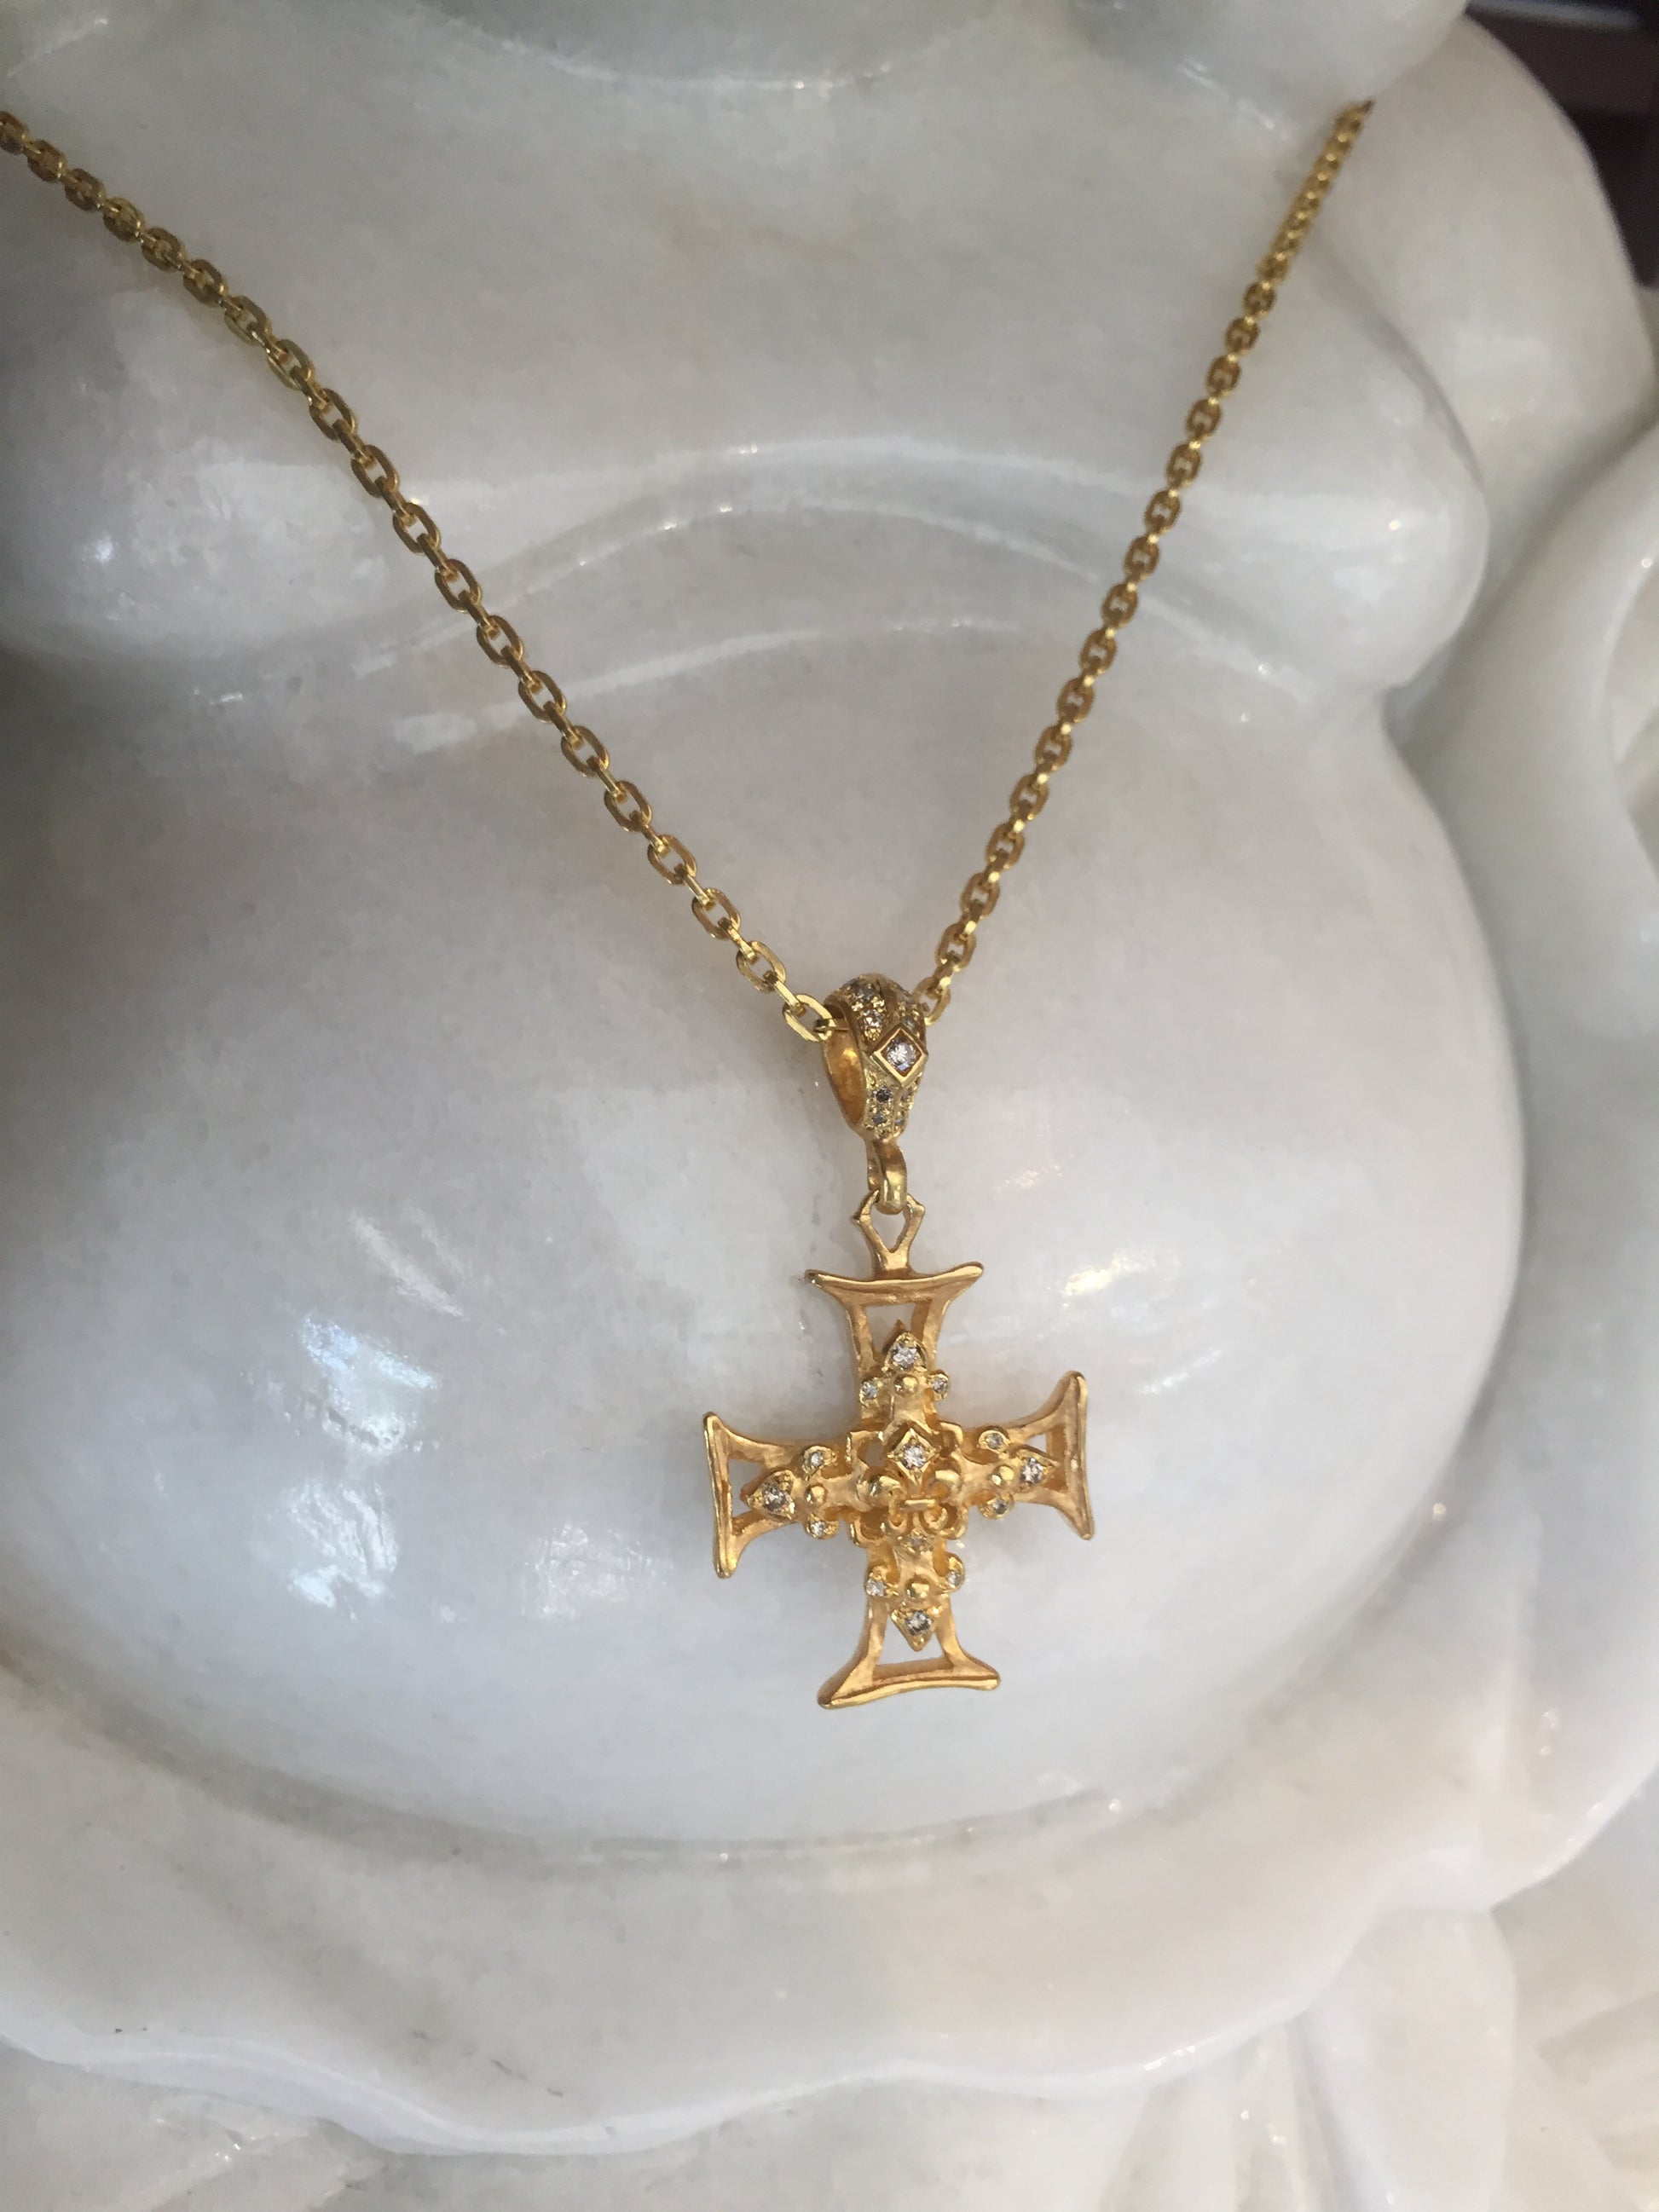 Necklace - Golden/Sterling Silver Fleur de Lis Cross  by Roman Paul    